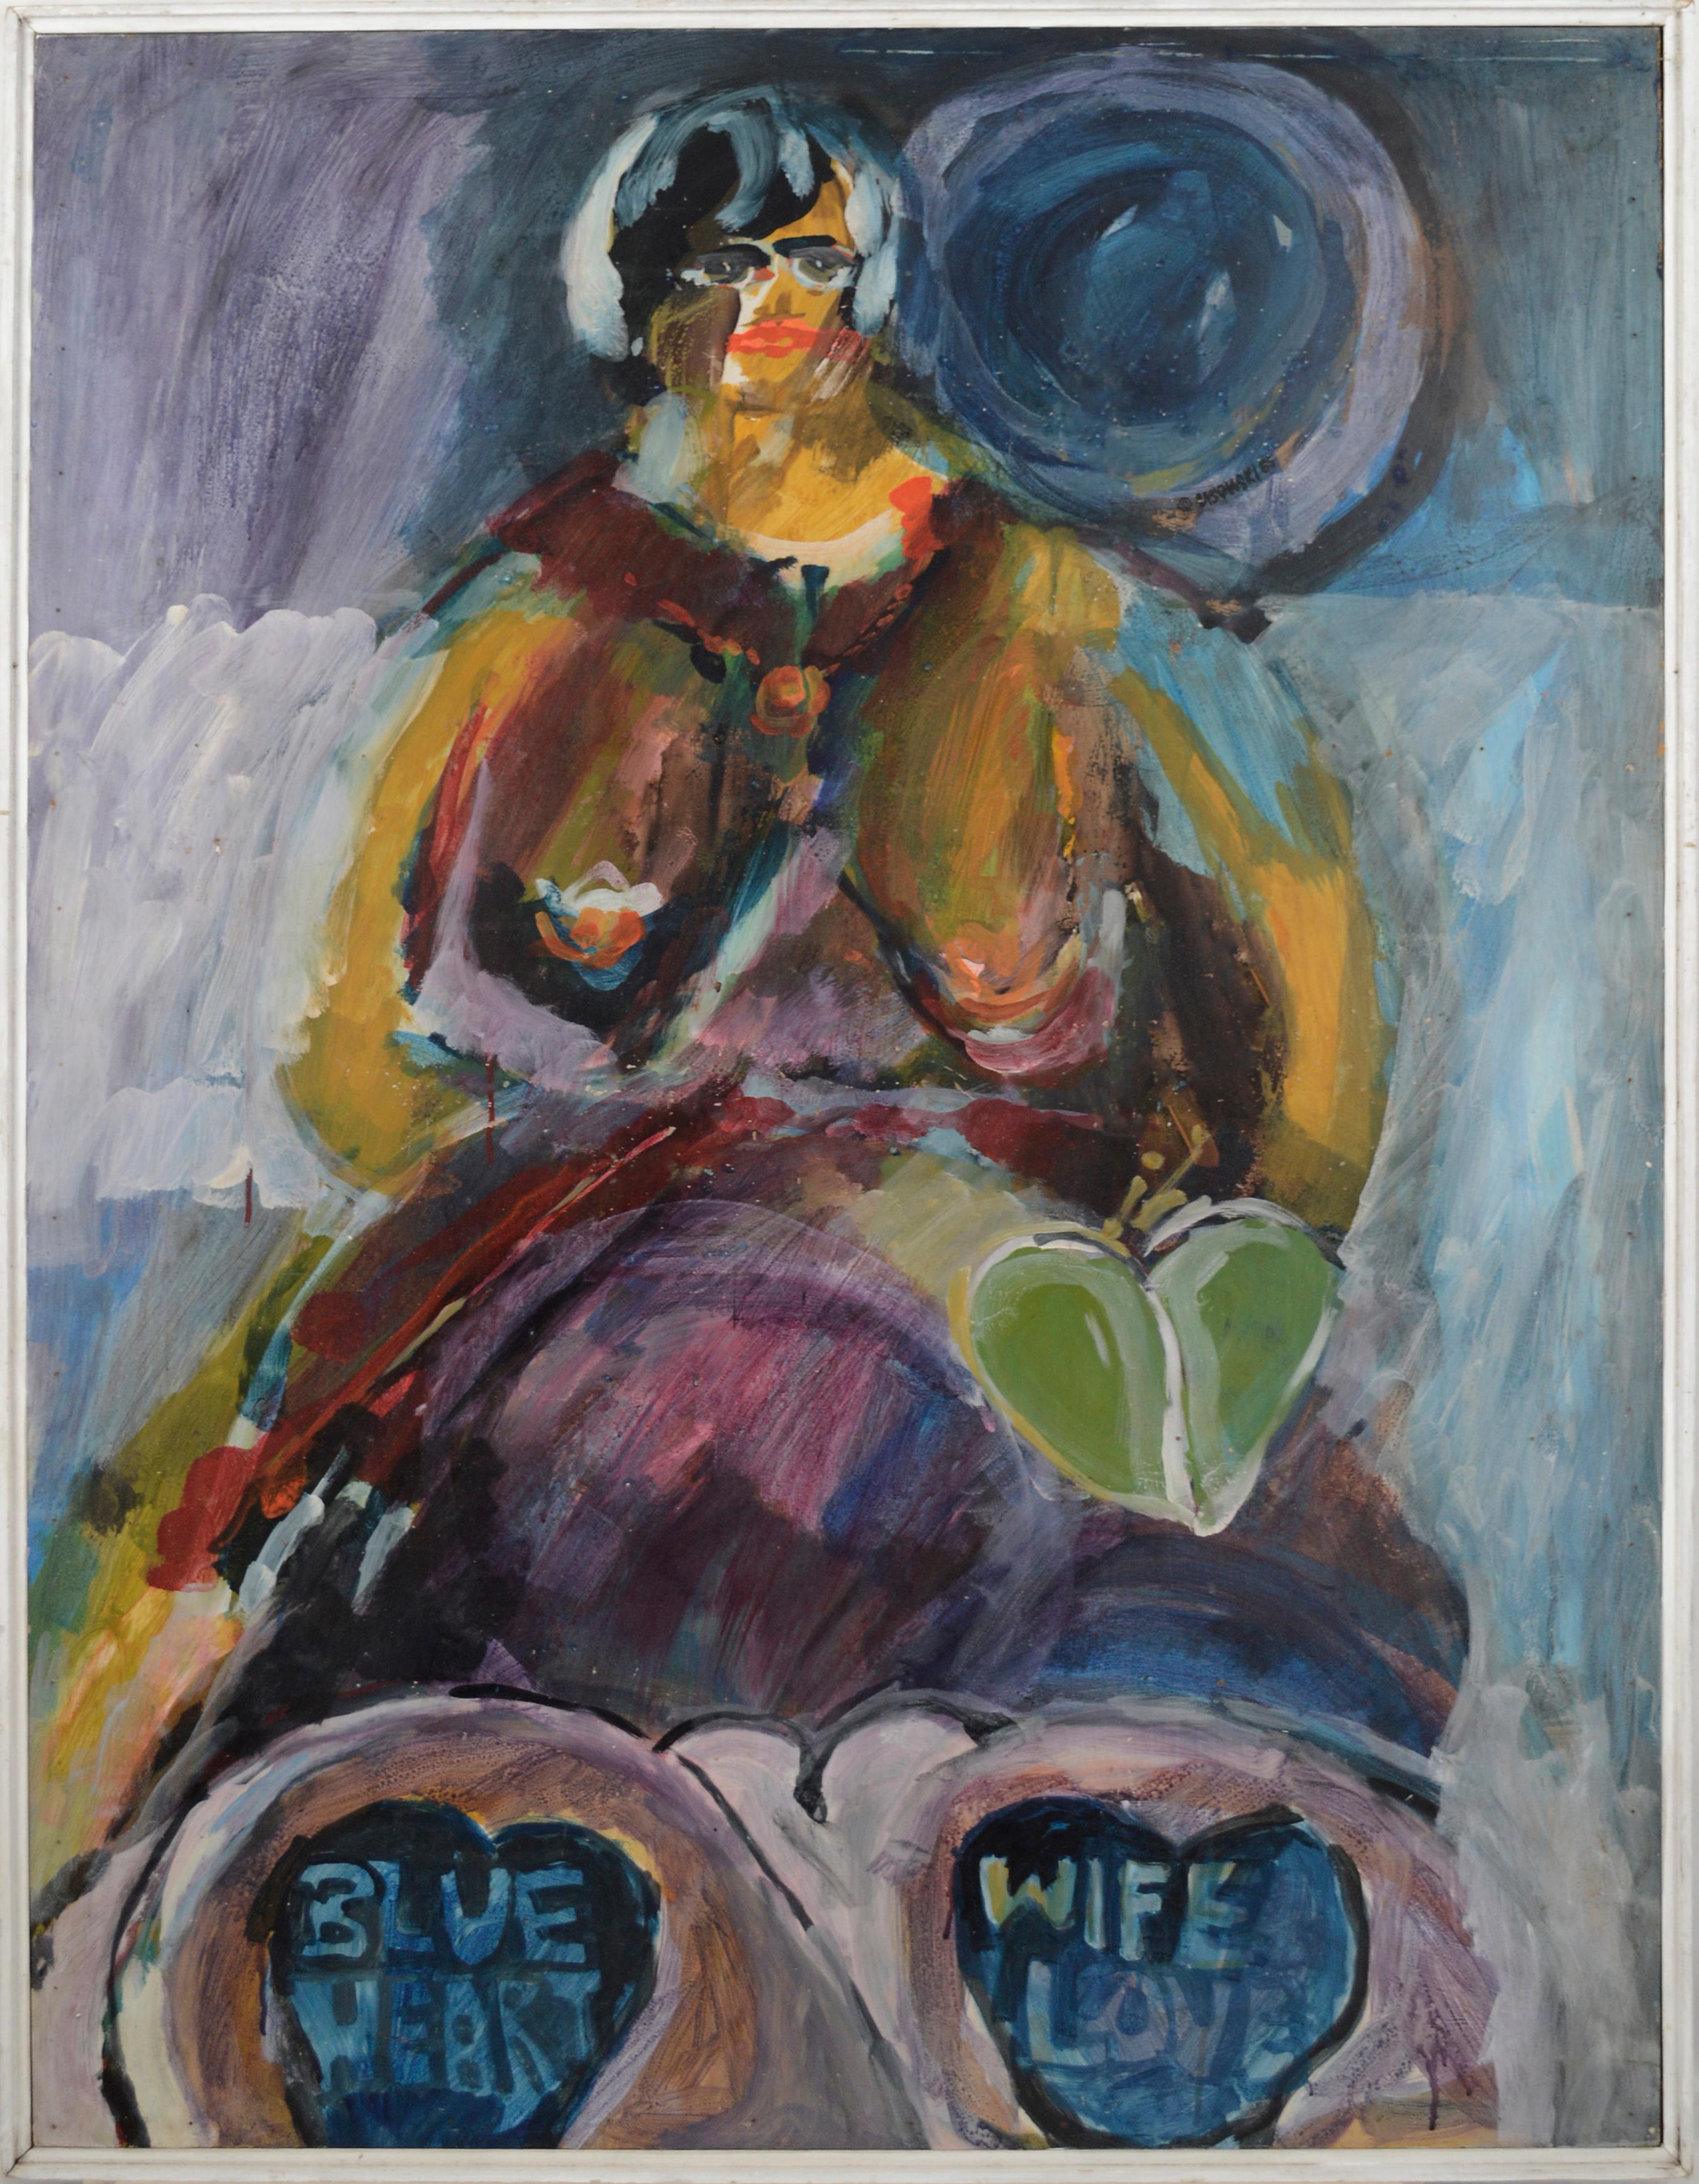 Joseph S. Lysowski Figurative Painting - "Blue Heart Wife Love" San Francisco Figurative School -Joe Lysowski "Prankster"